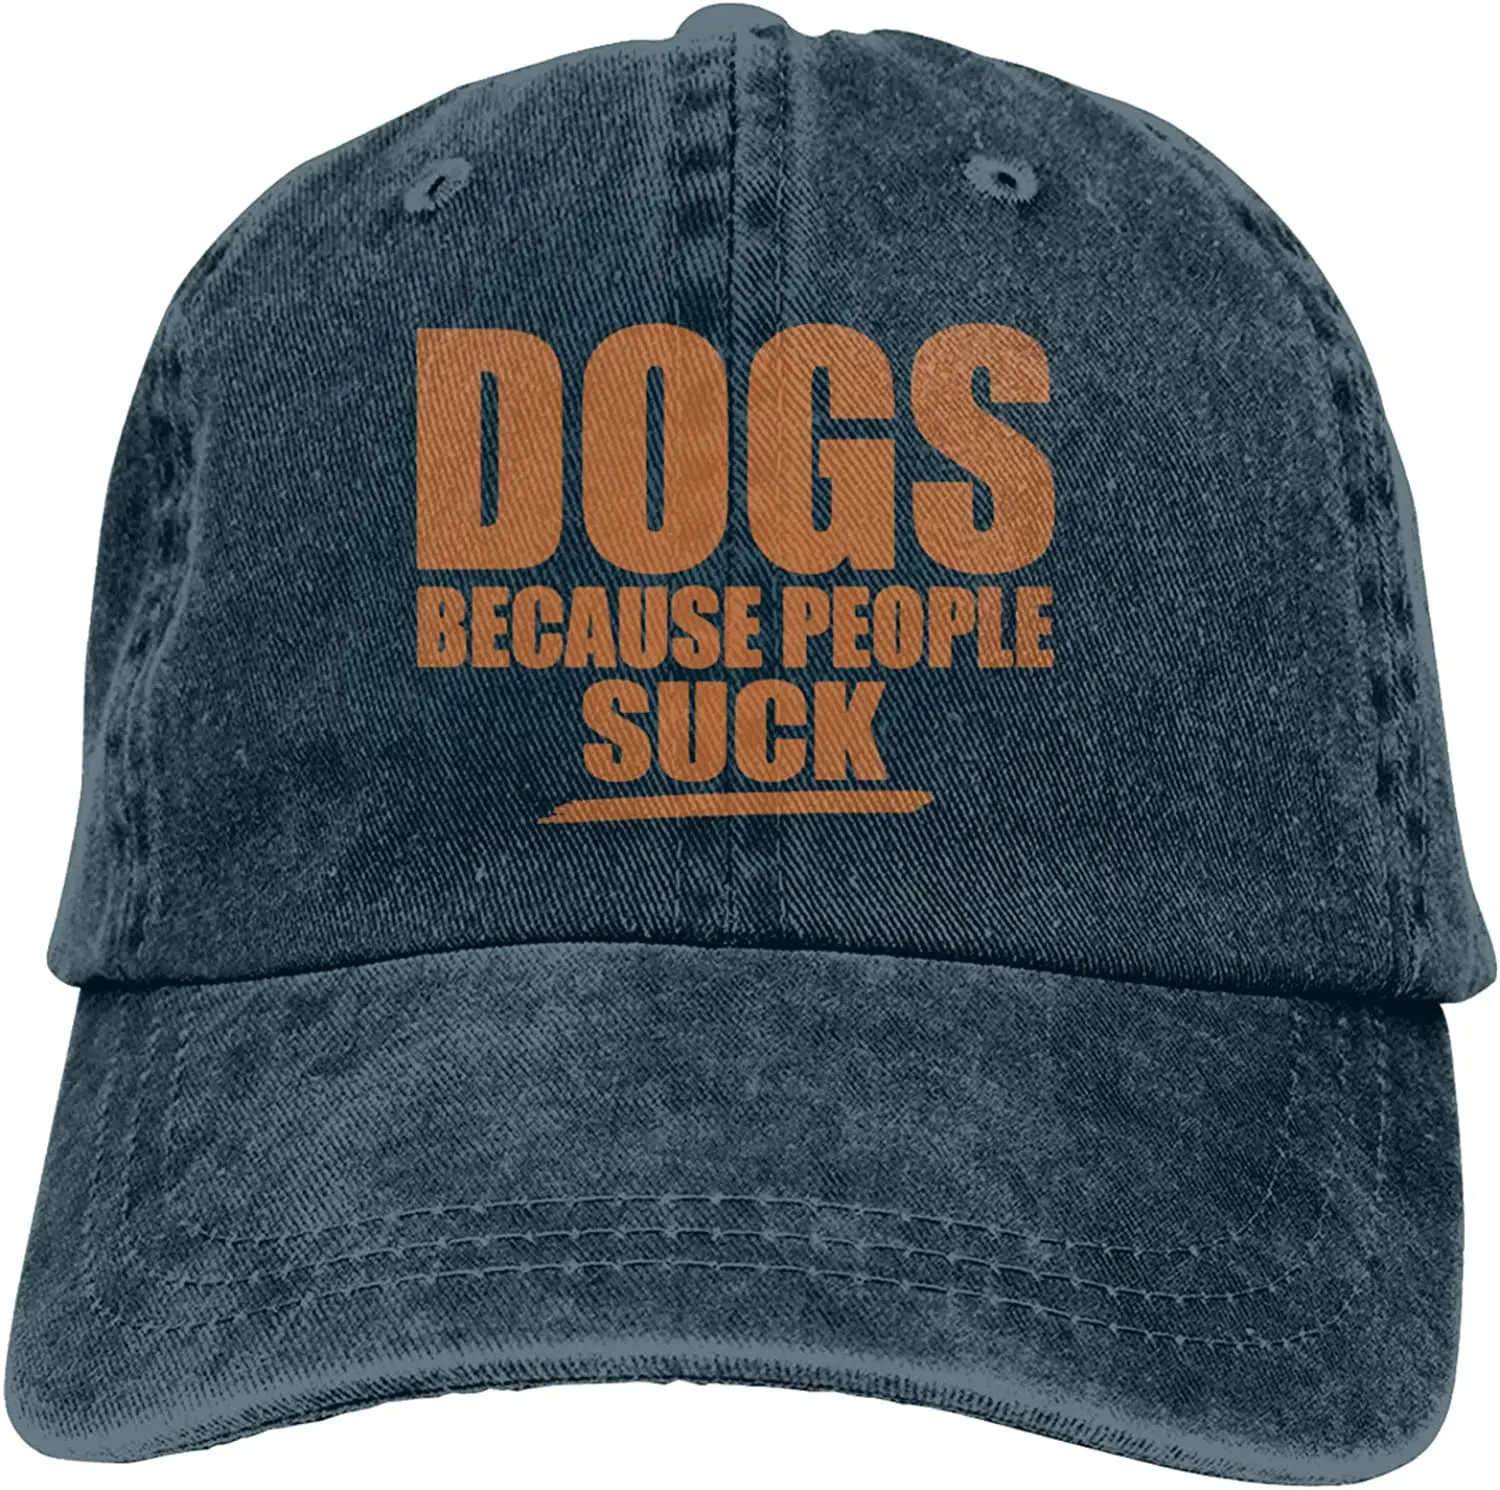 

Denim Cap Dogs Because People Suck Baseball Dad Cap Classic Adjustable Casual Sports for Men Women Hats